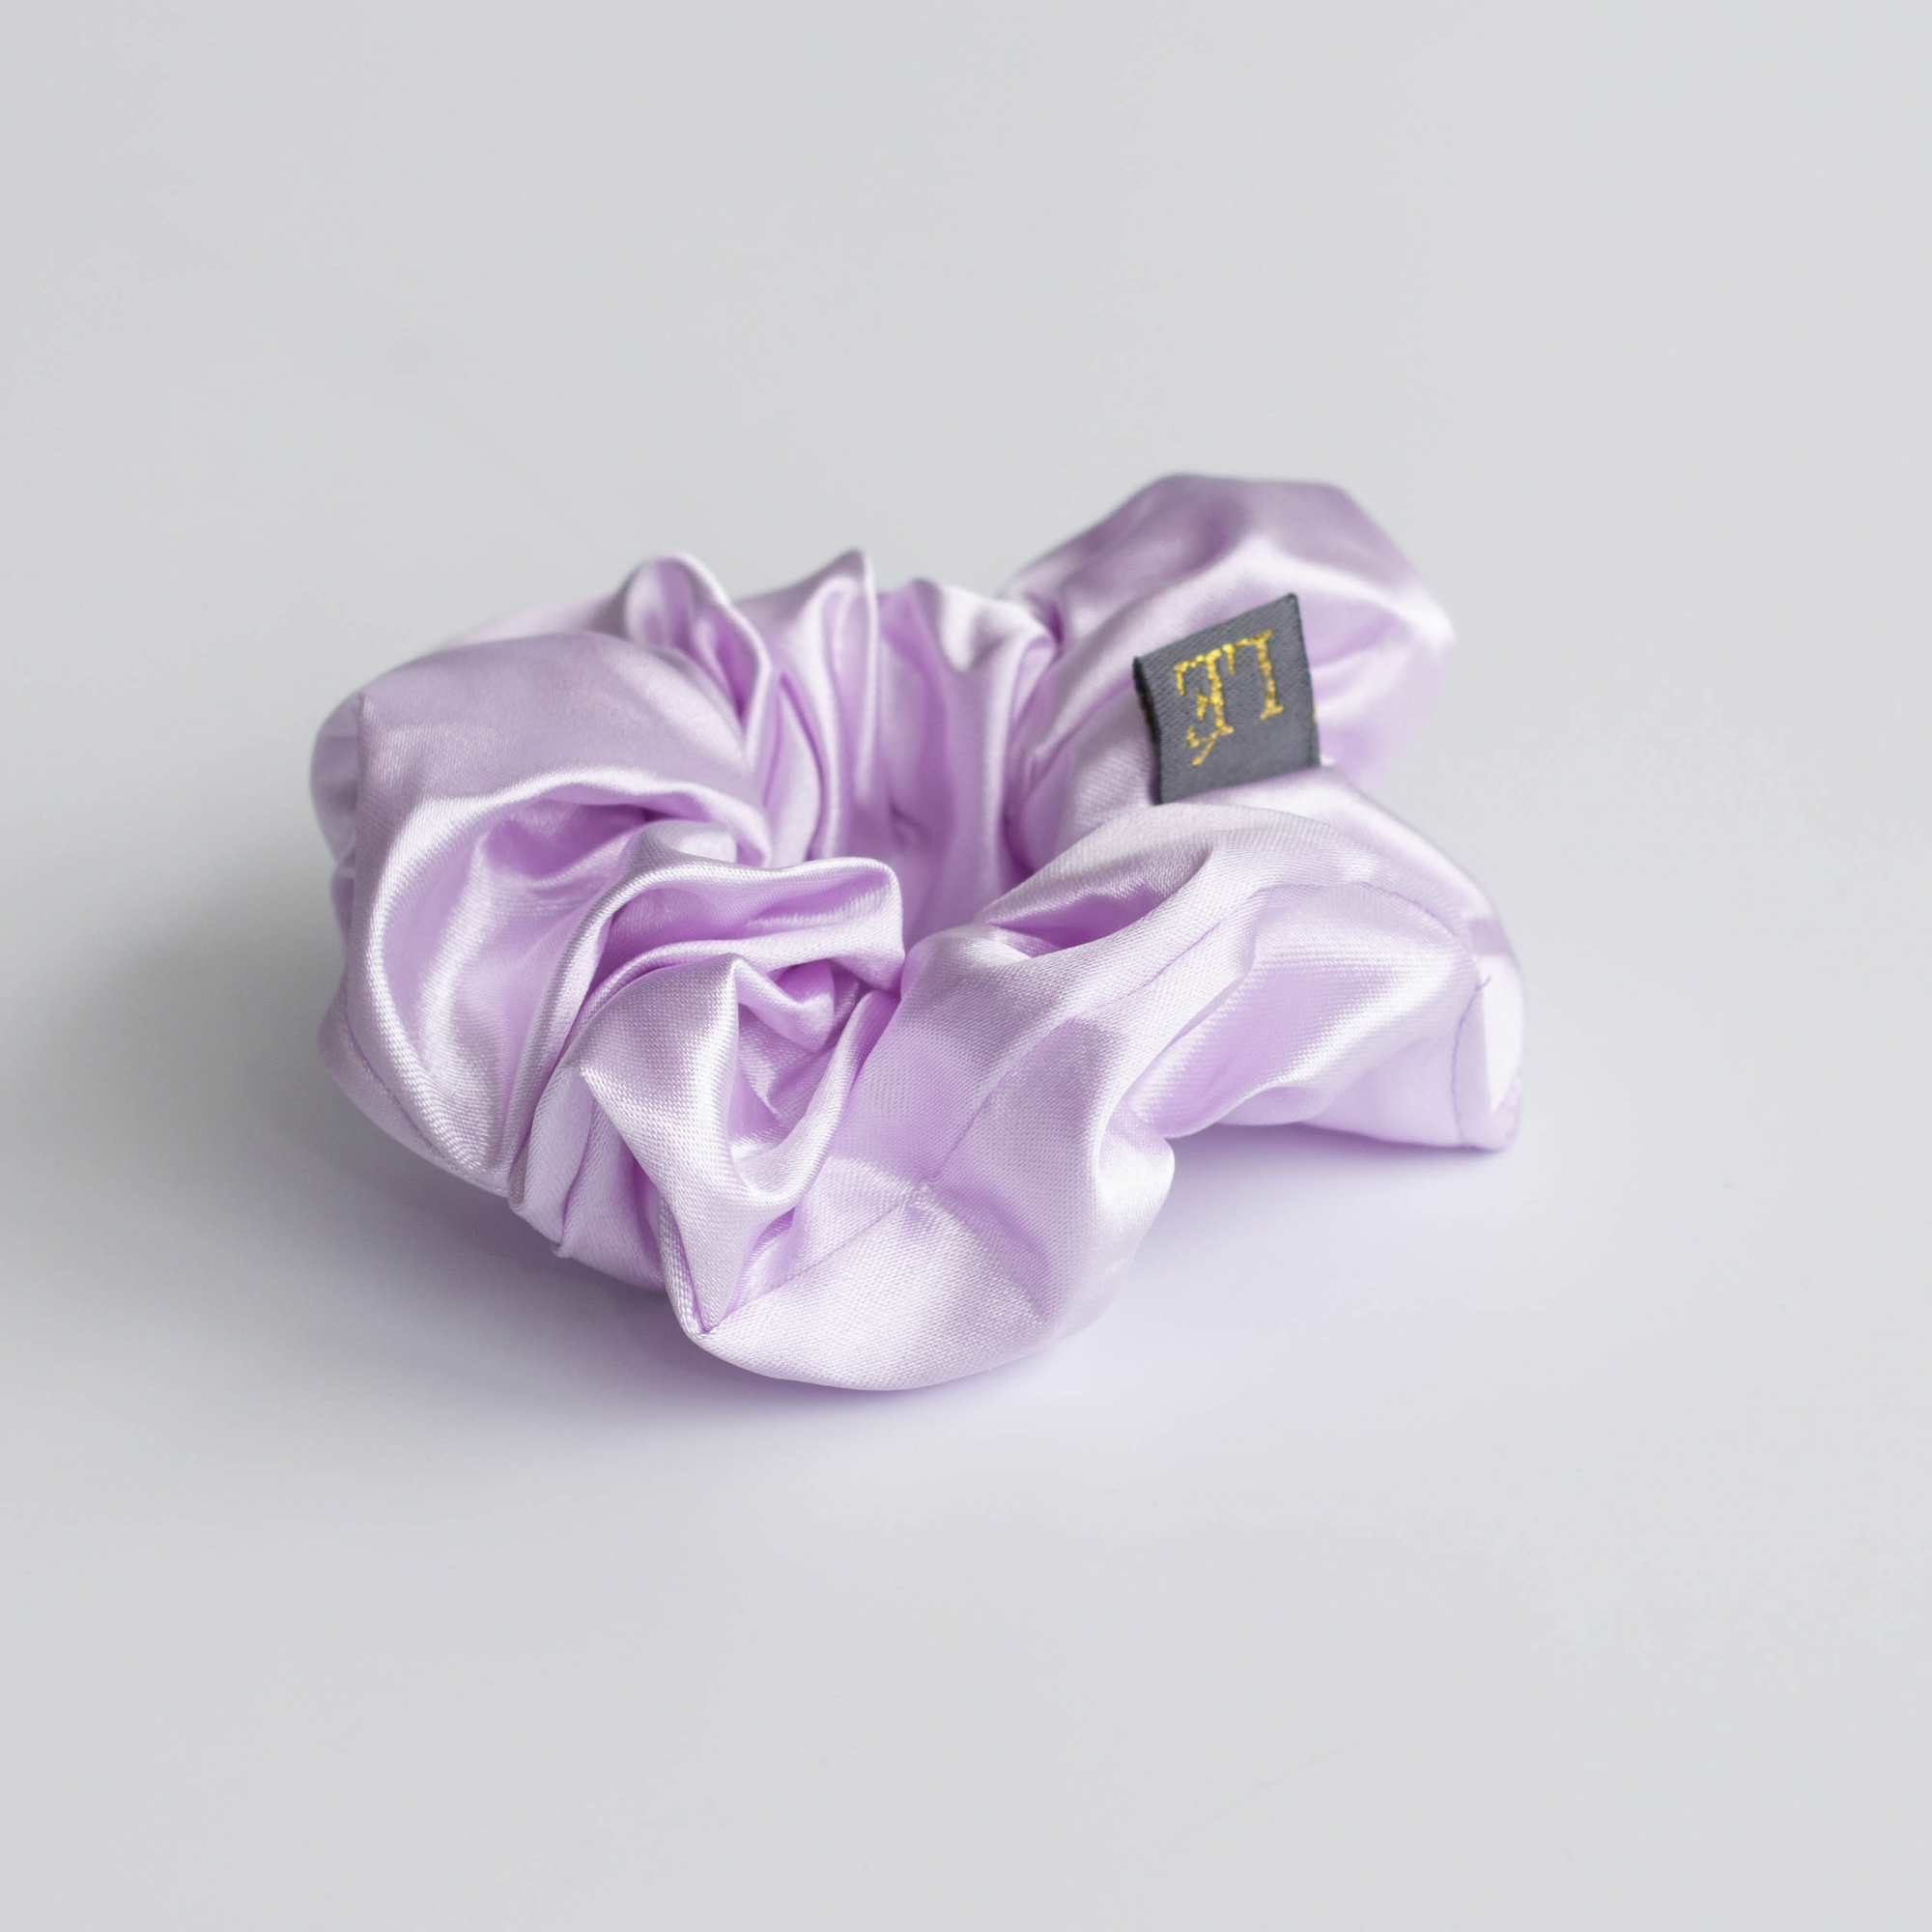 Køb Silk alm Scrunchie i Lilac fra LÉ MOSCH her